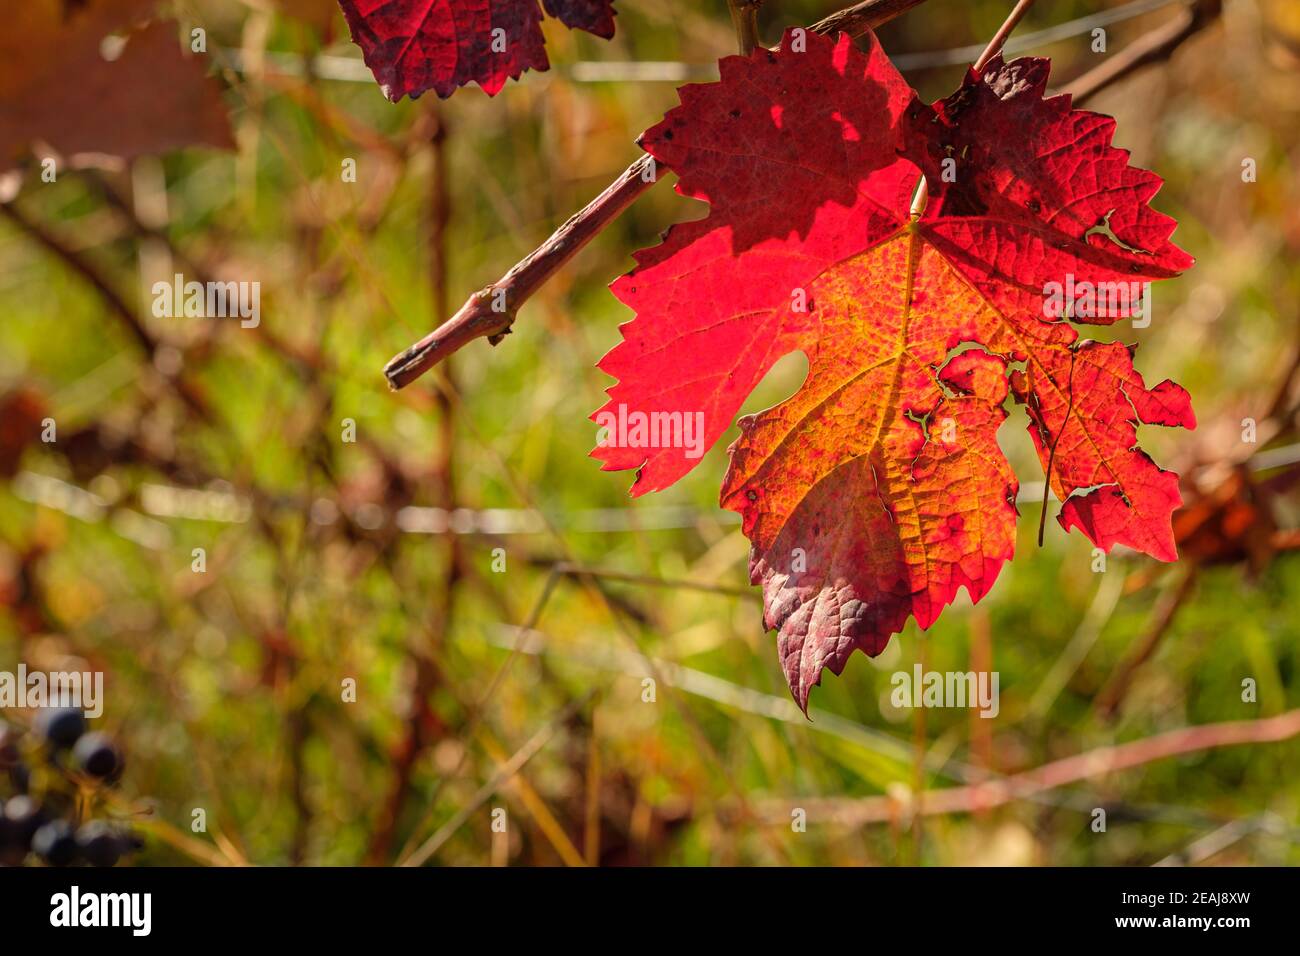 Red orange grape leav in autumn colour close-up Stock Photo